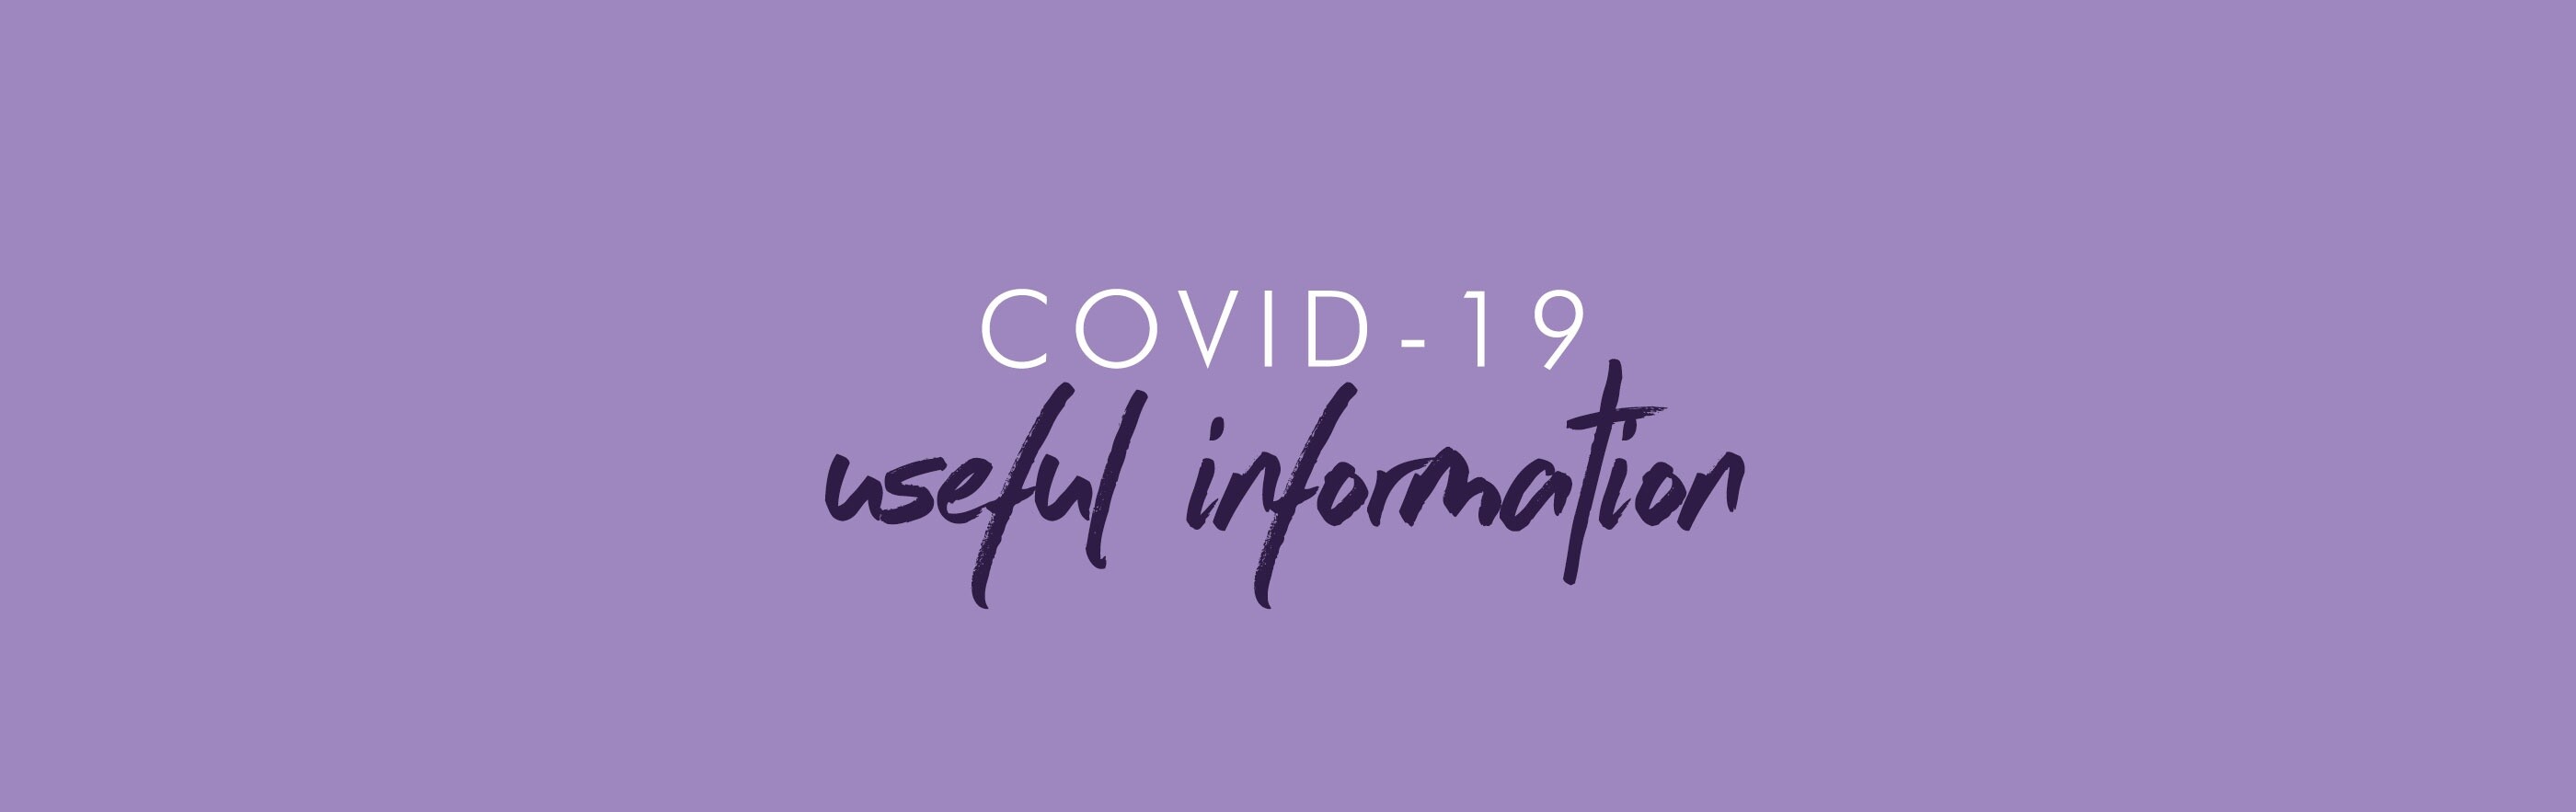 COVID-19 Useful Information